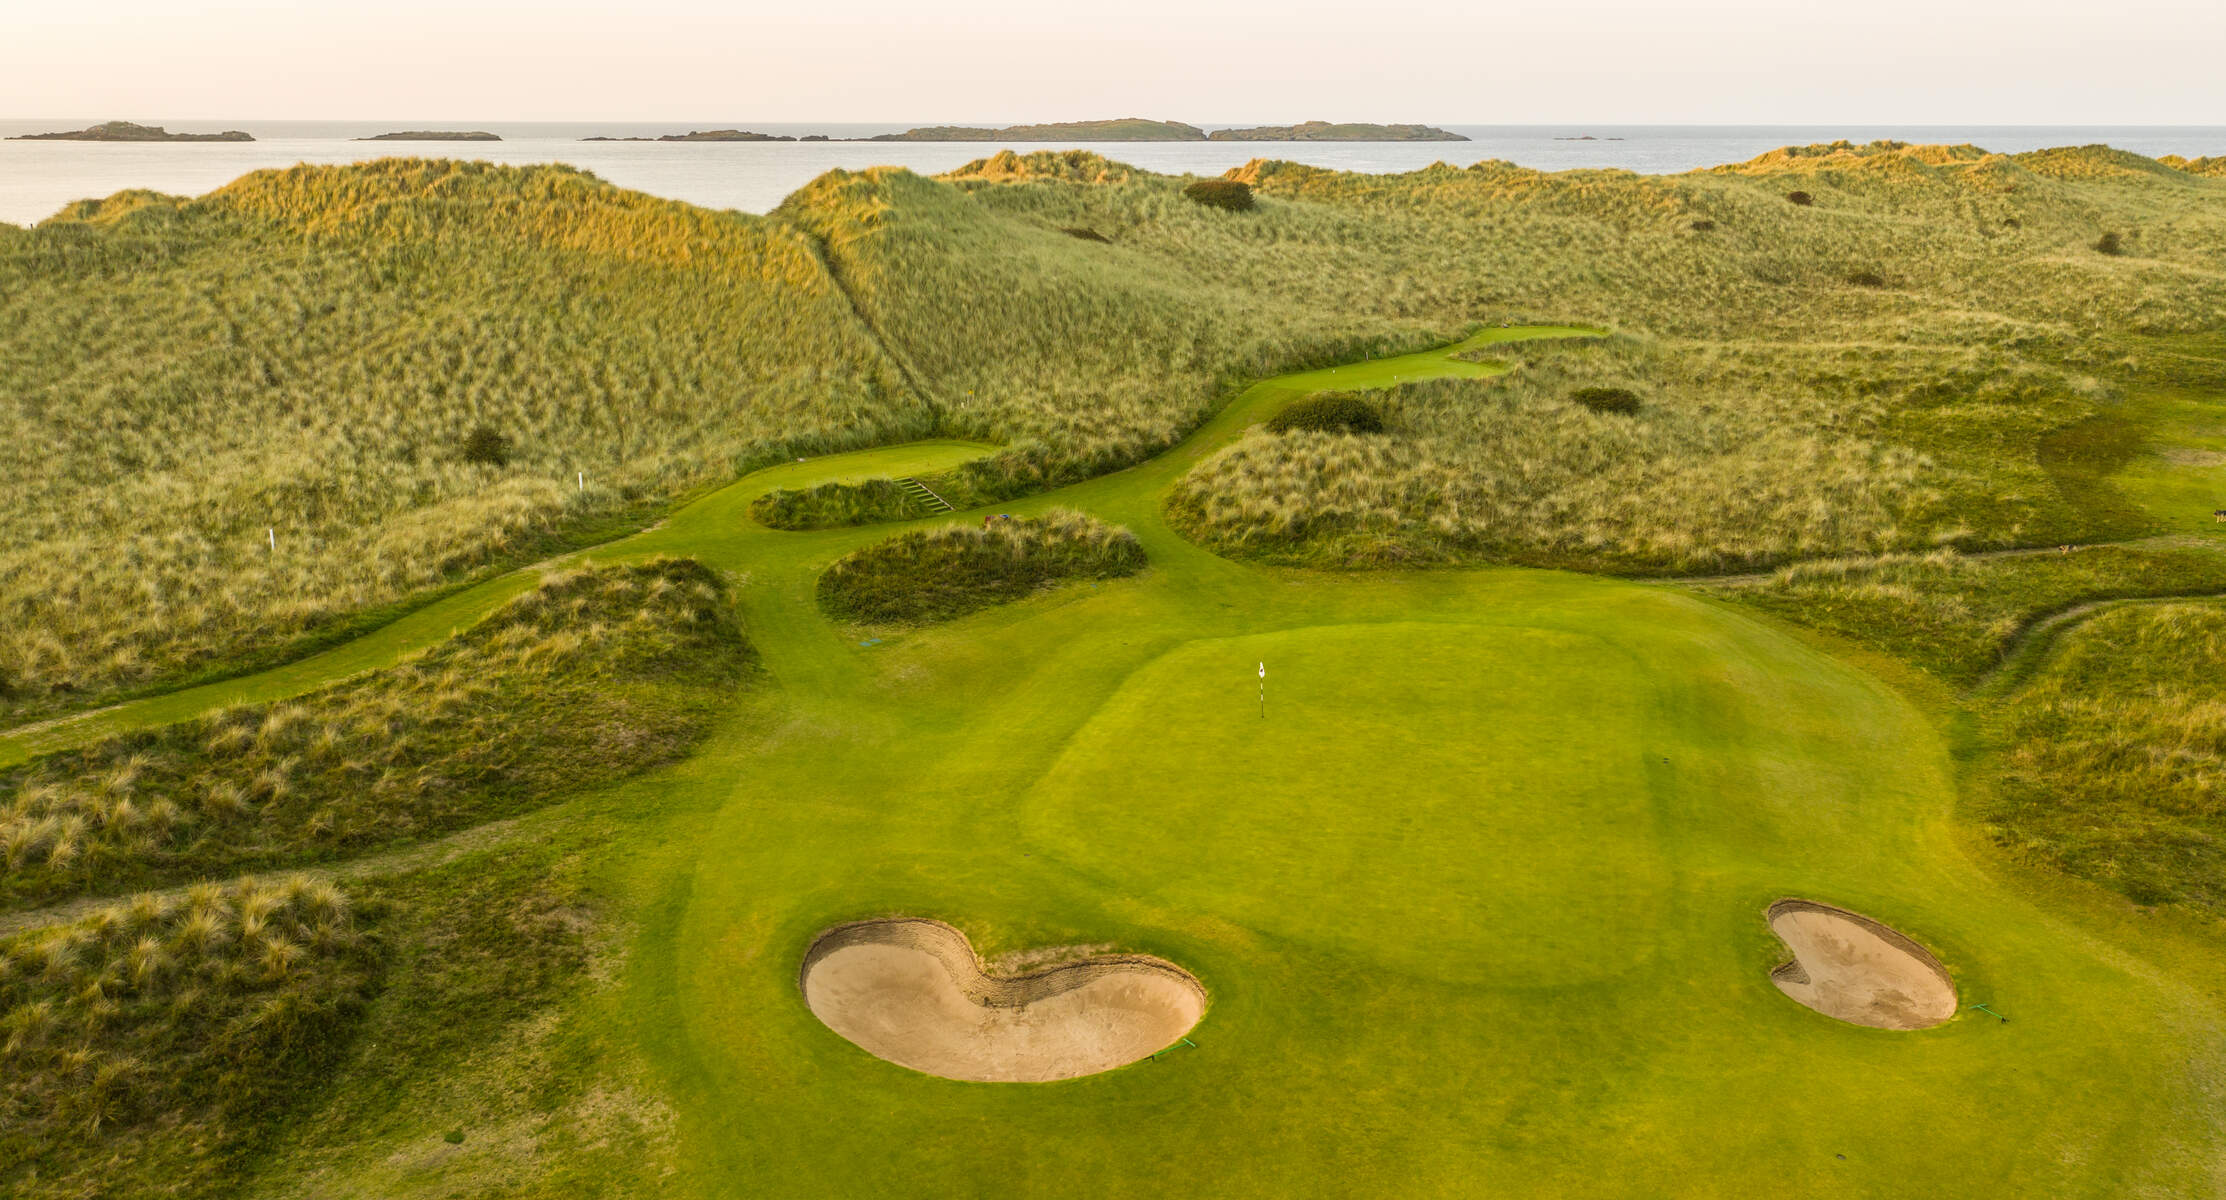 Photo 1 – Royal Portrush golf course